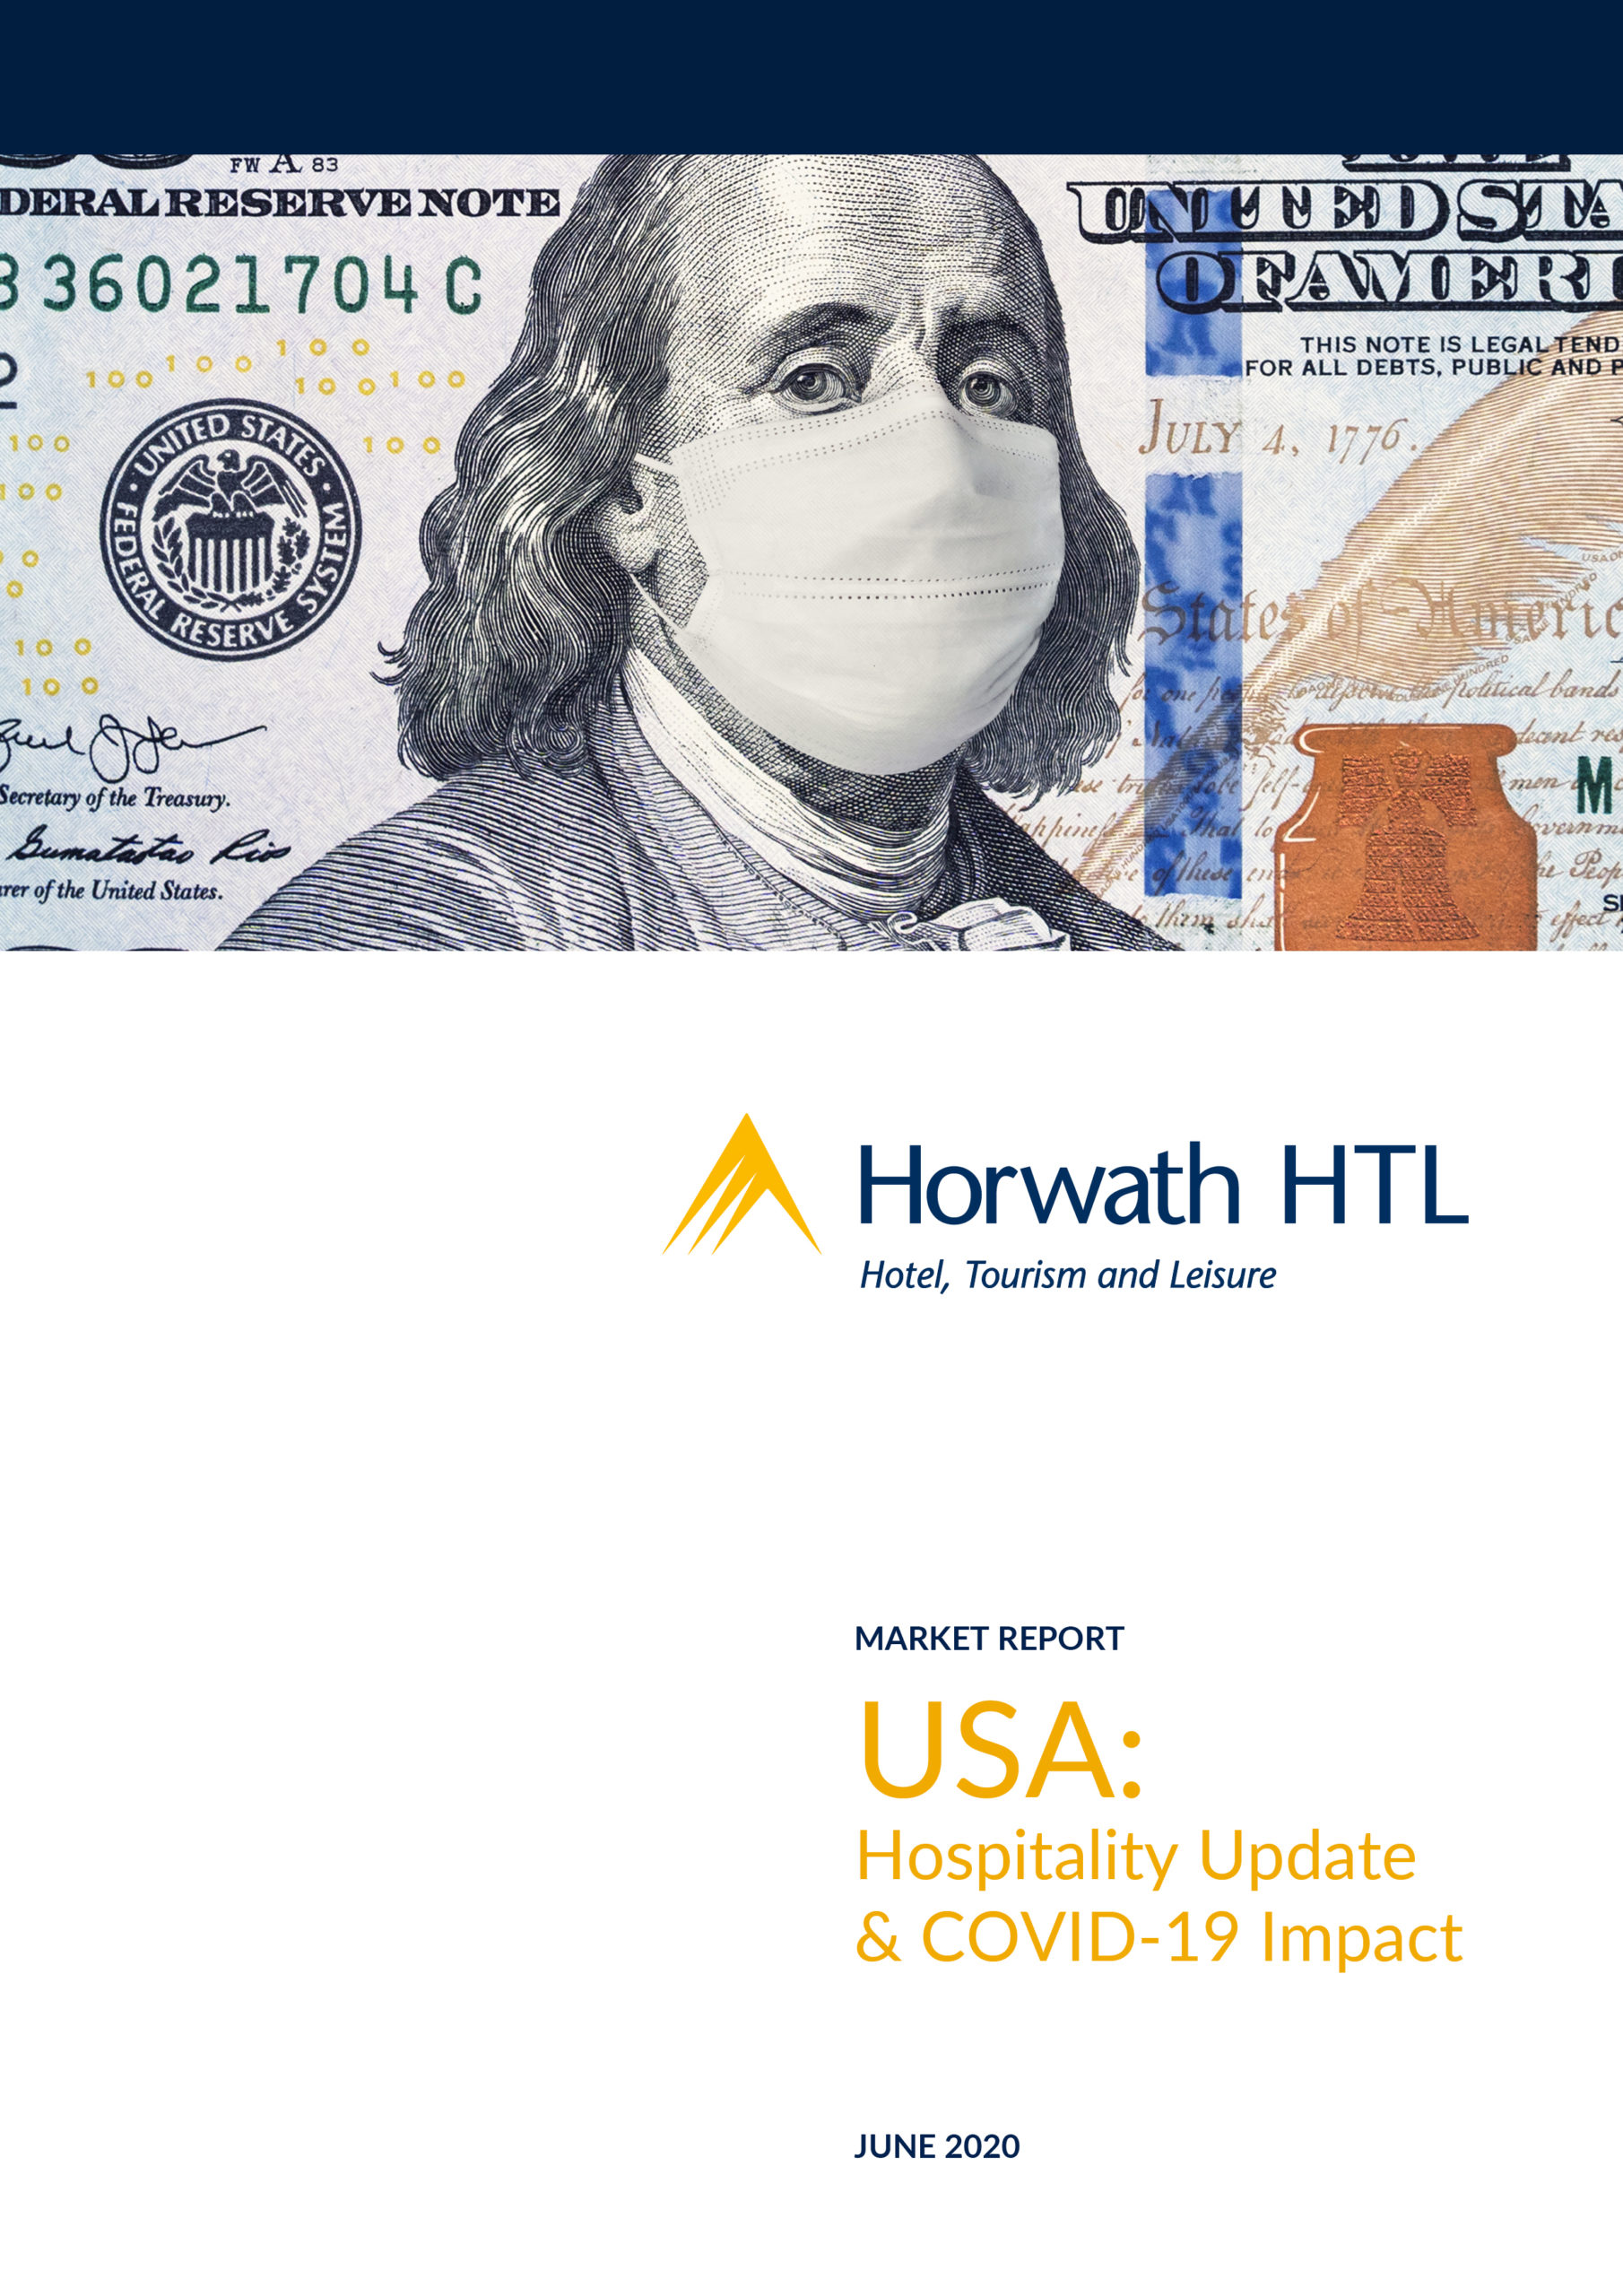 UPDATED: USA Hospitality & COVID-19 Impact